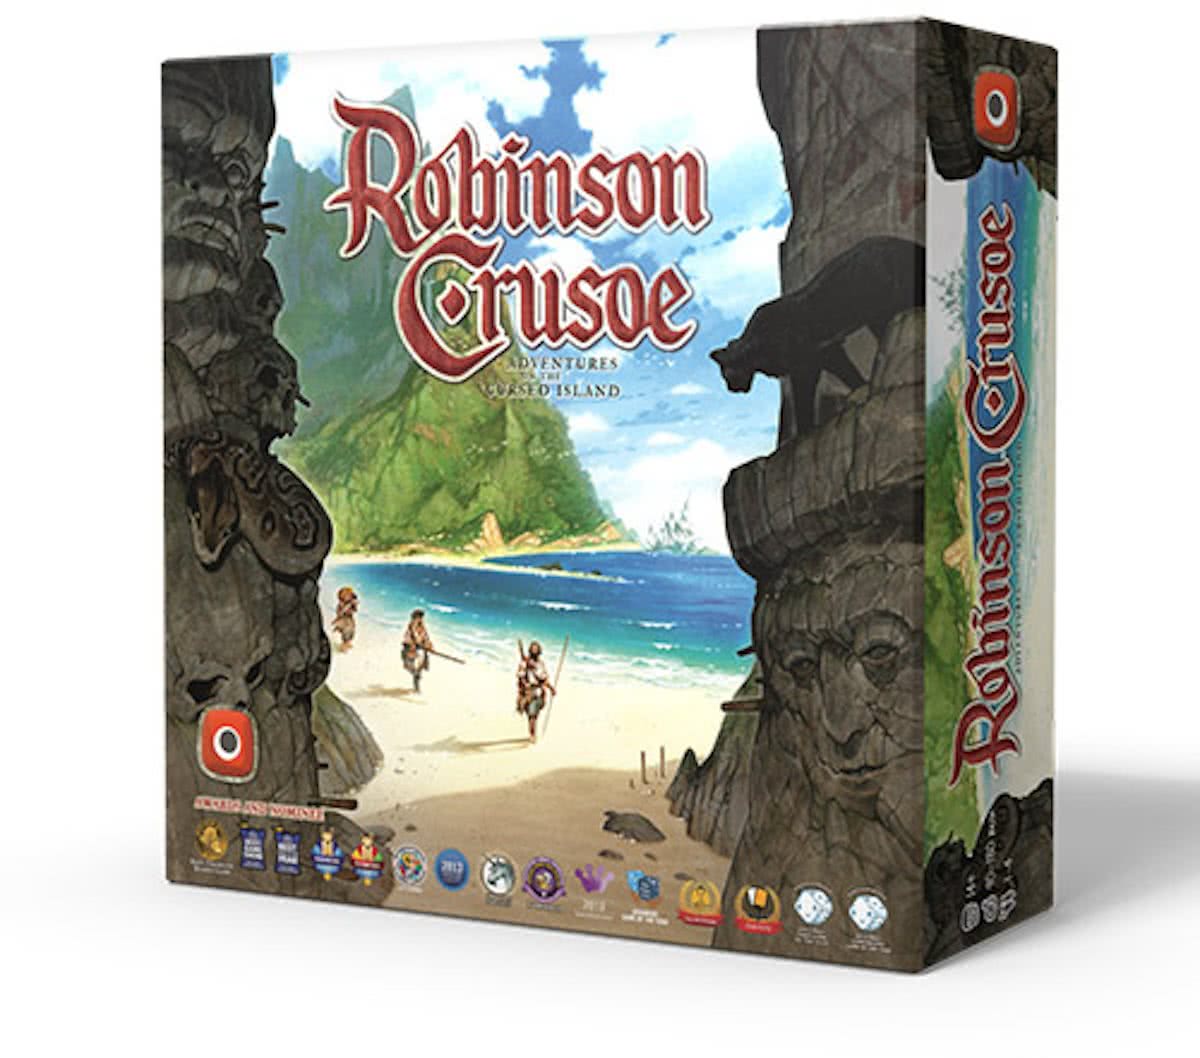 Robinson Crusoe: Adventures on the Cursed Island description reviews